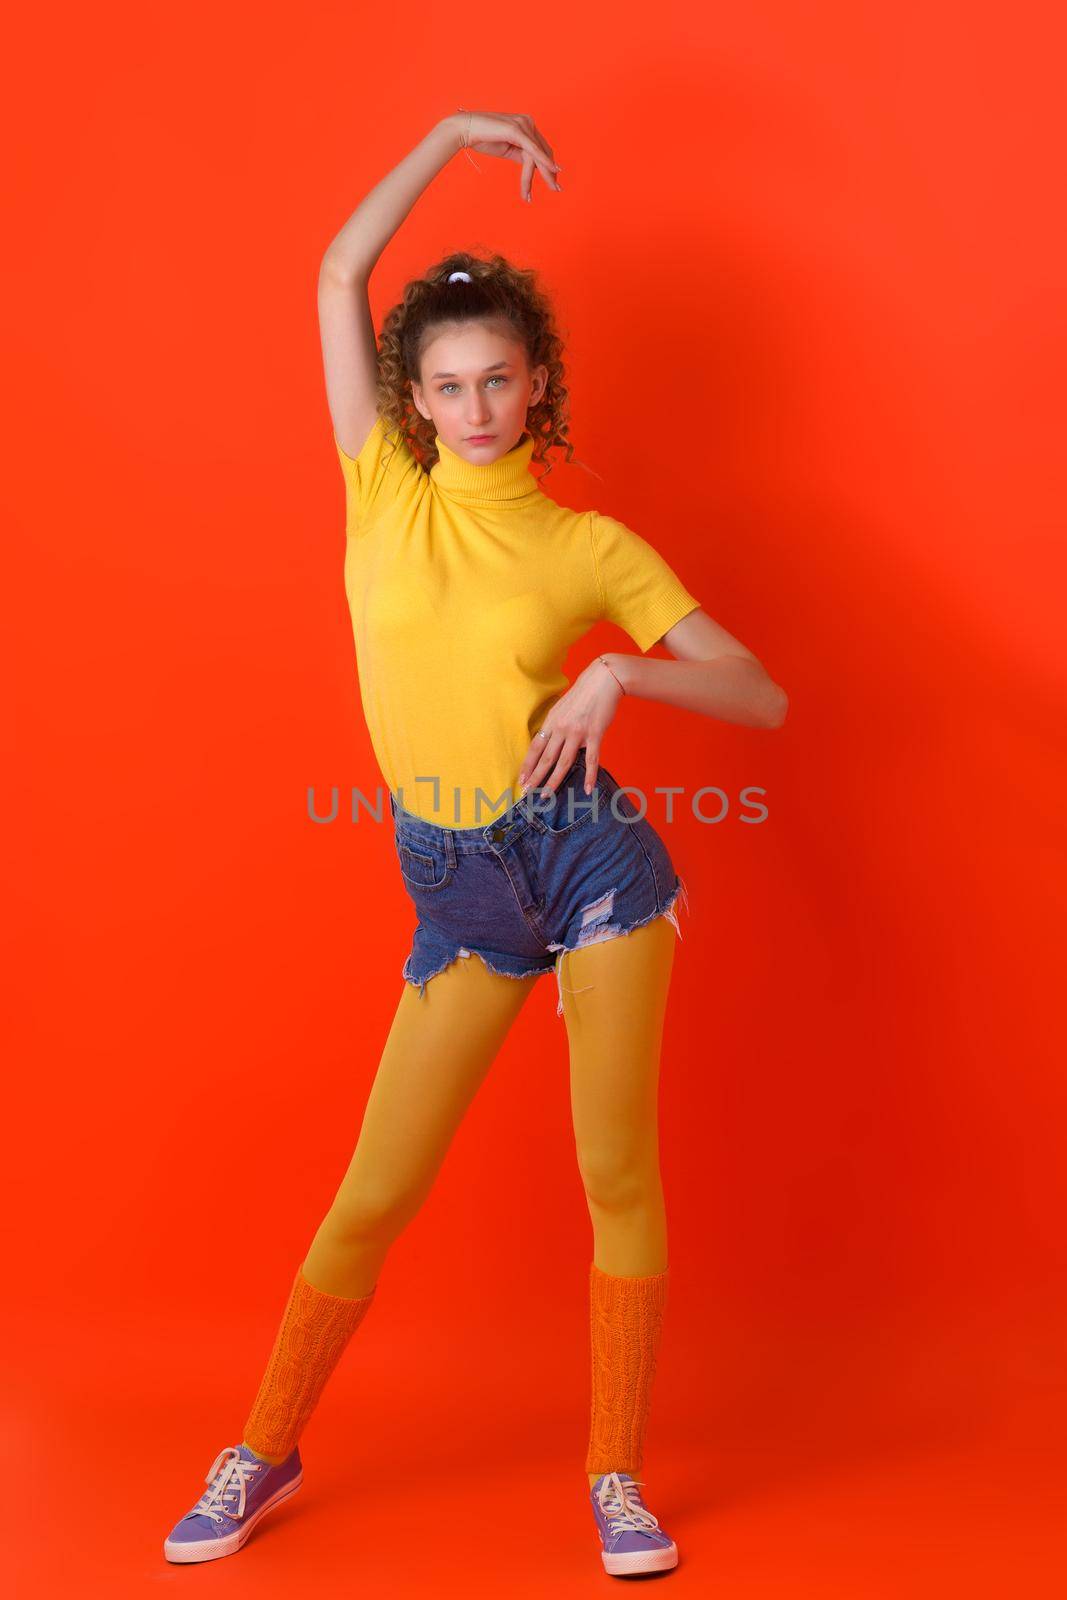 Pretty fitness girl posing relaxed on red backdrop by kolesnikov_studio